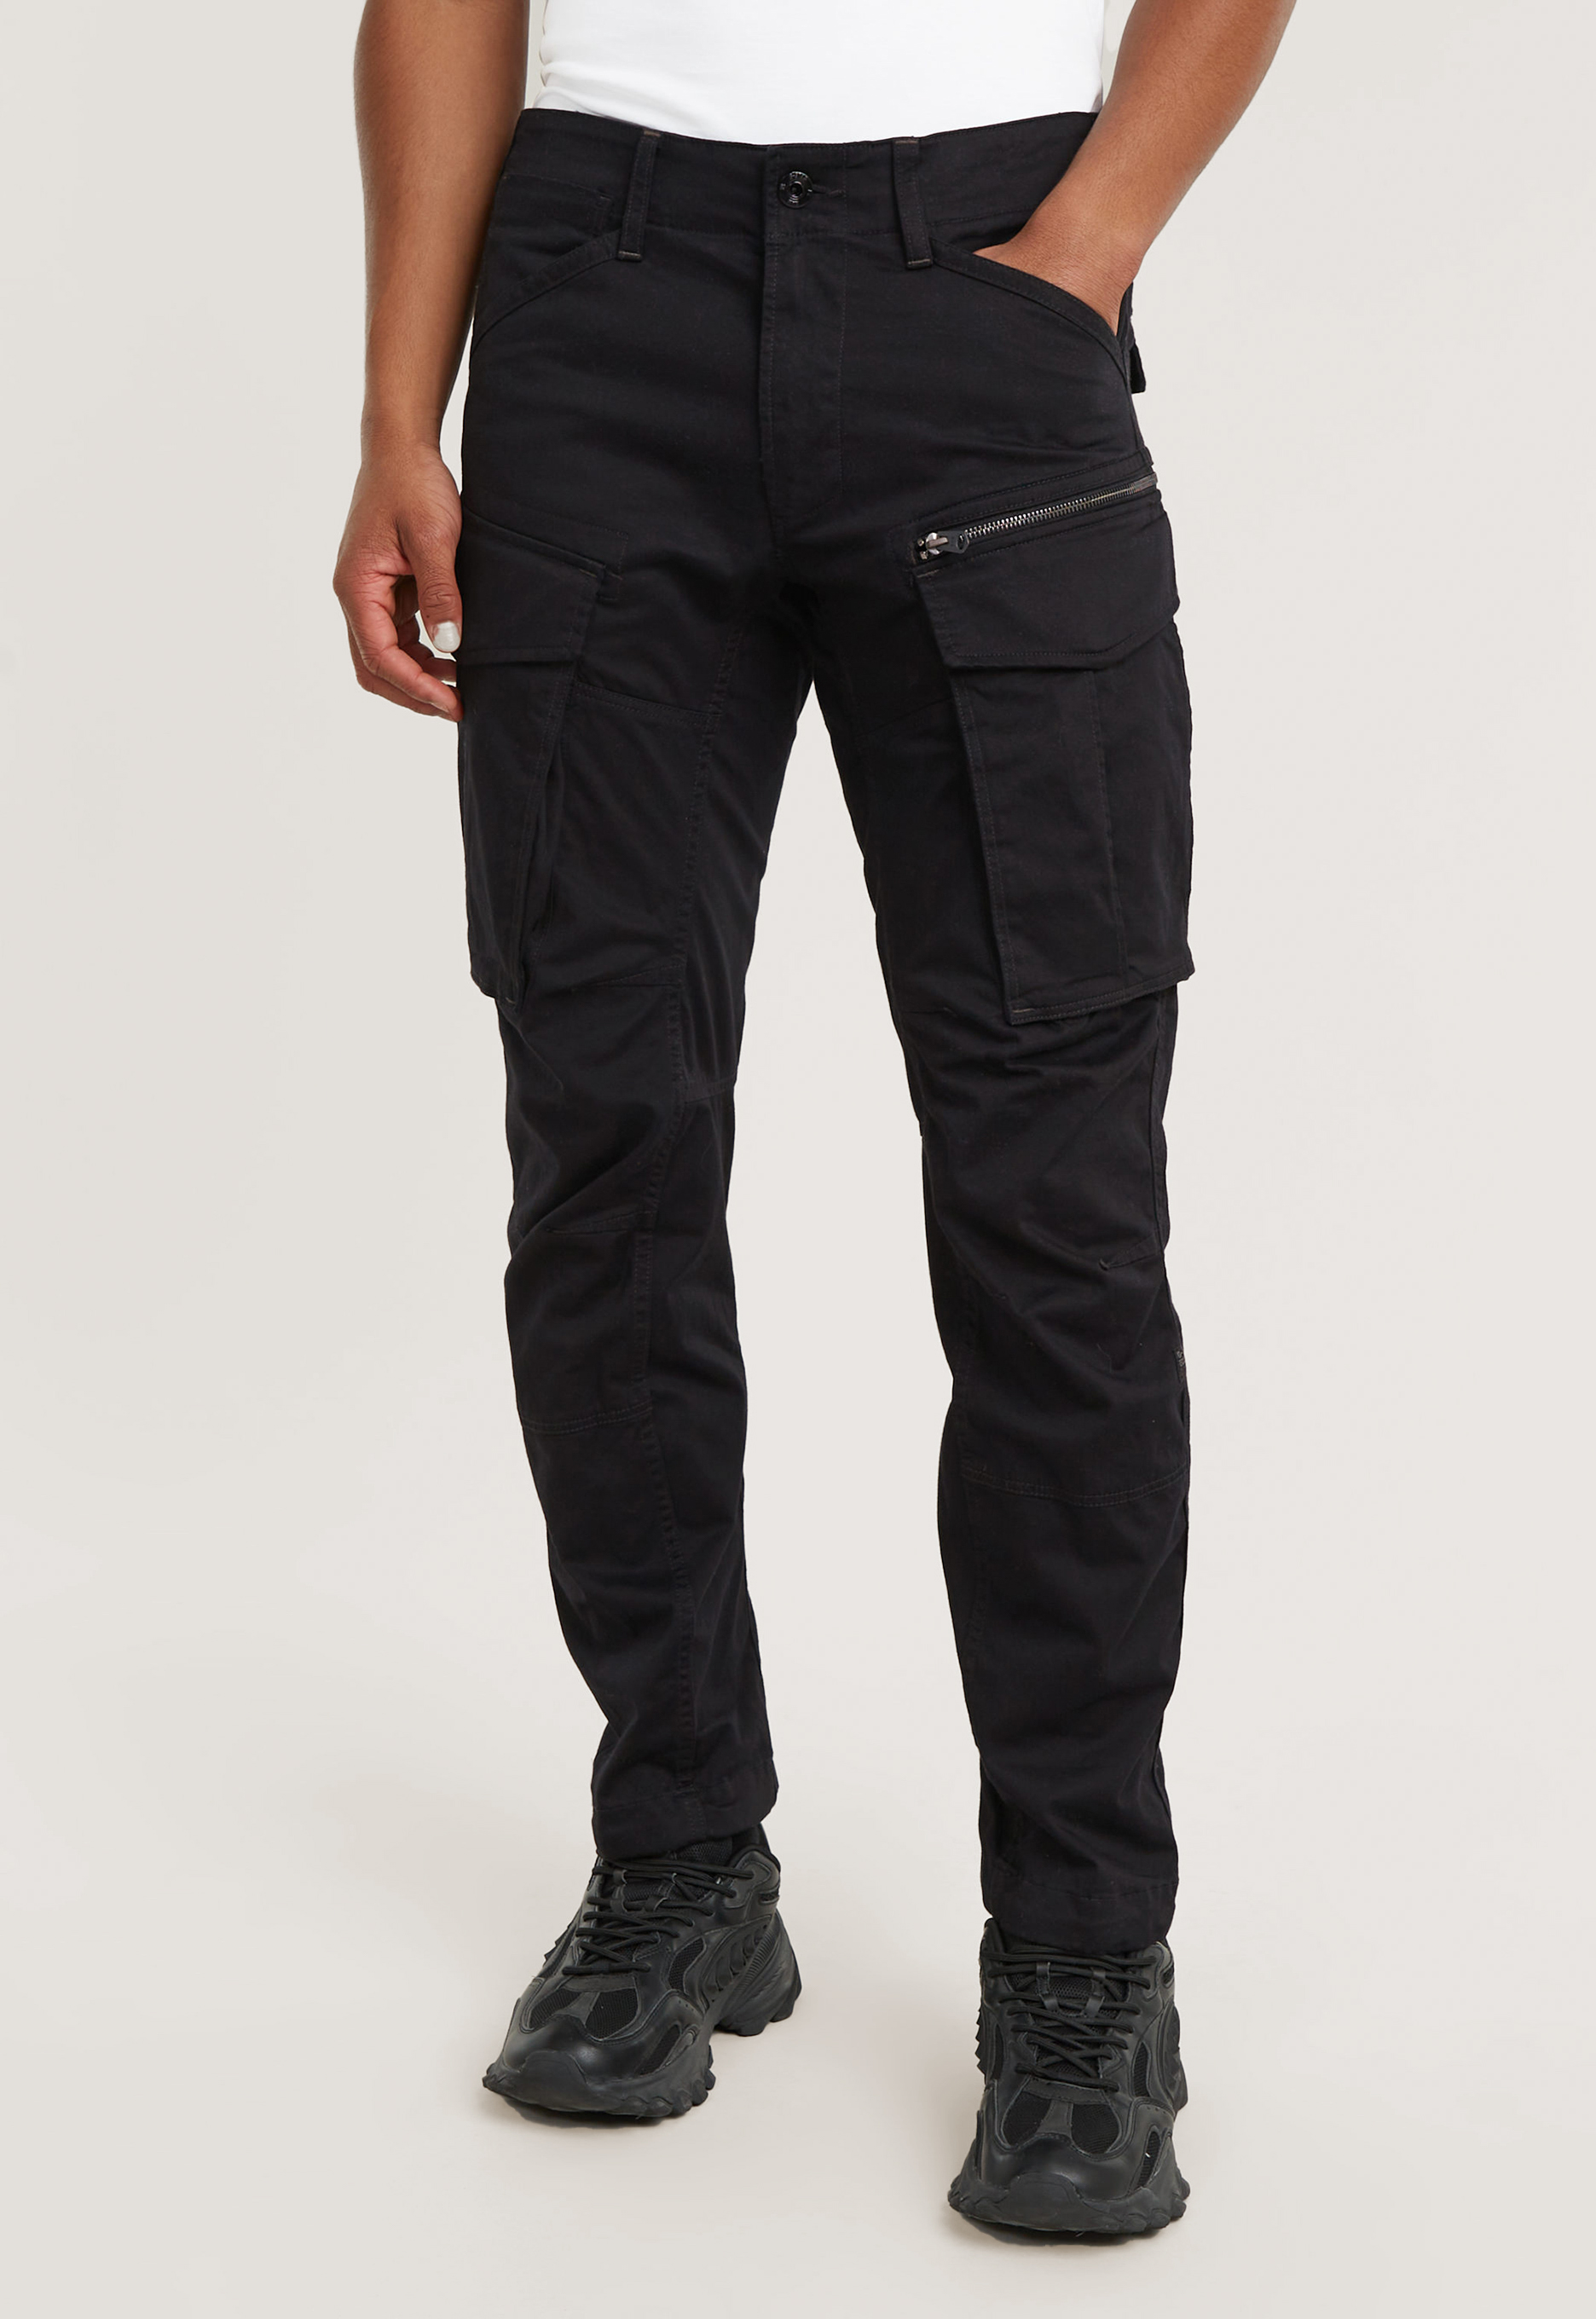 G-star raw Rovic Zip 3D Regular Tapered Jeans